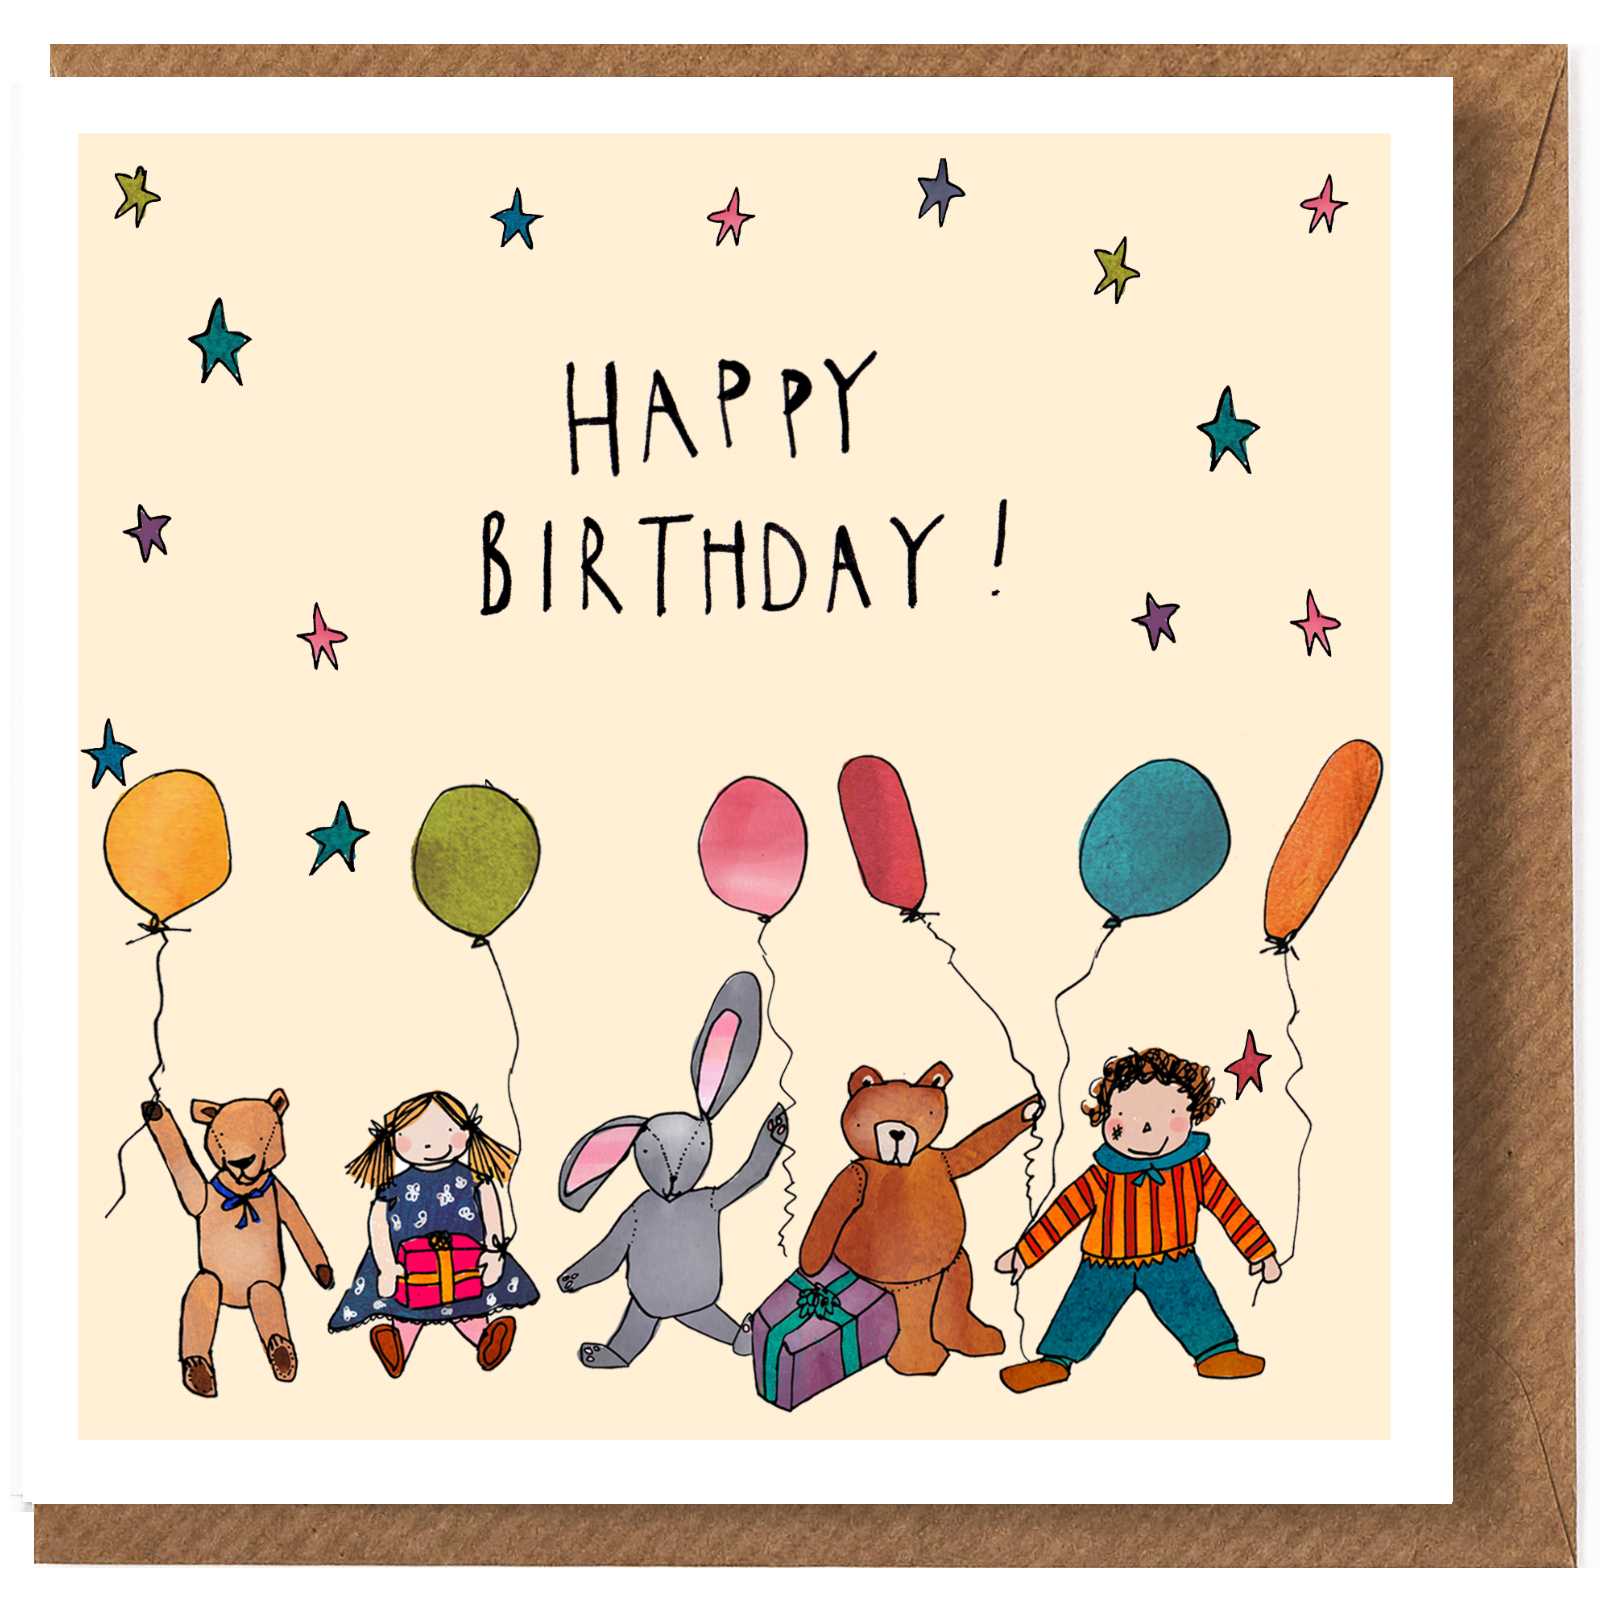 Happy Birthday To You Kids - Birthday Ideas